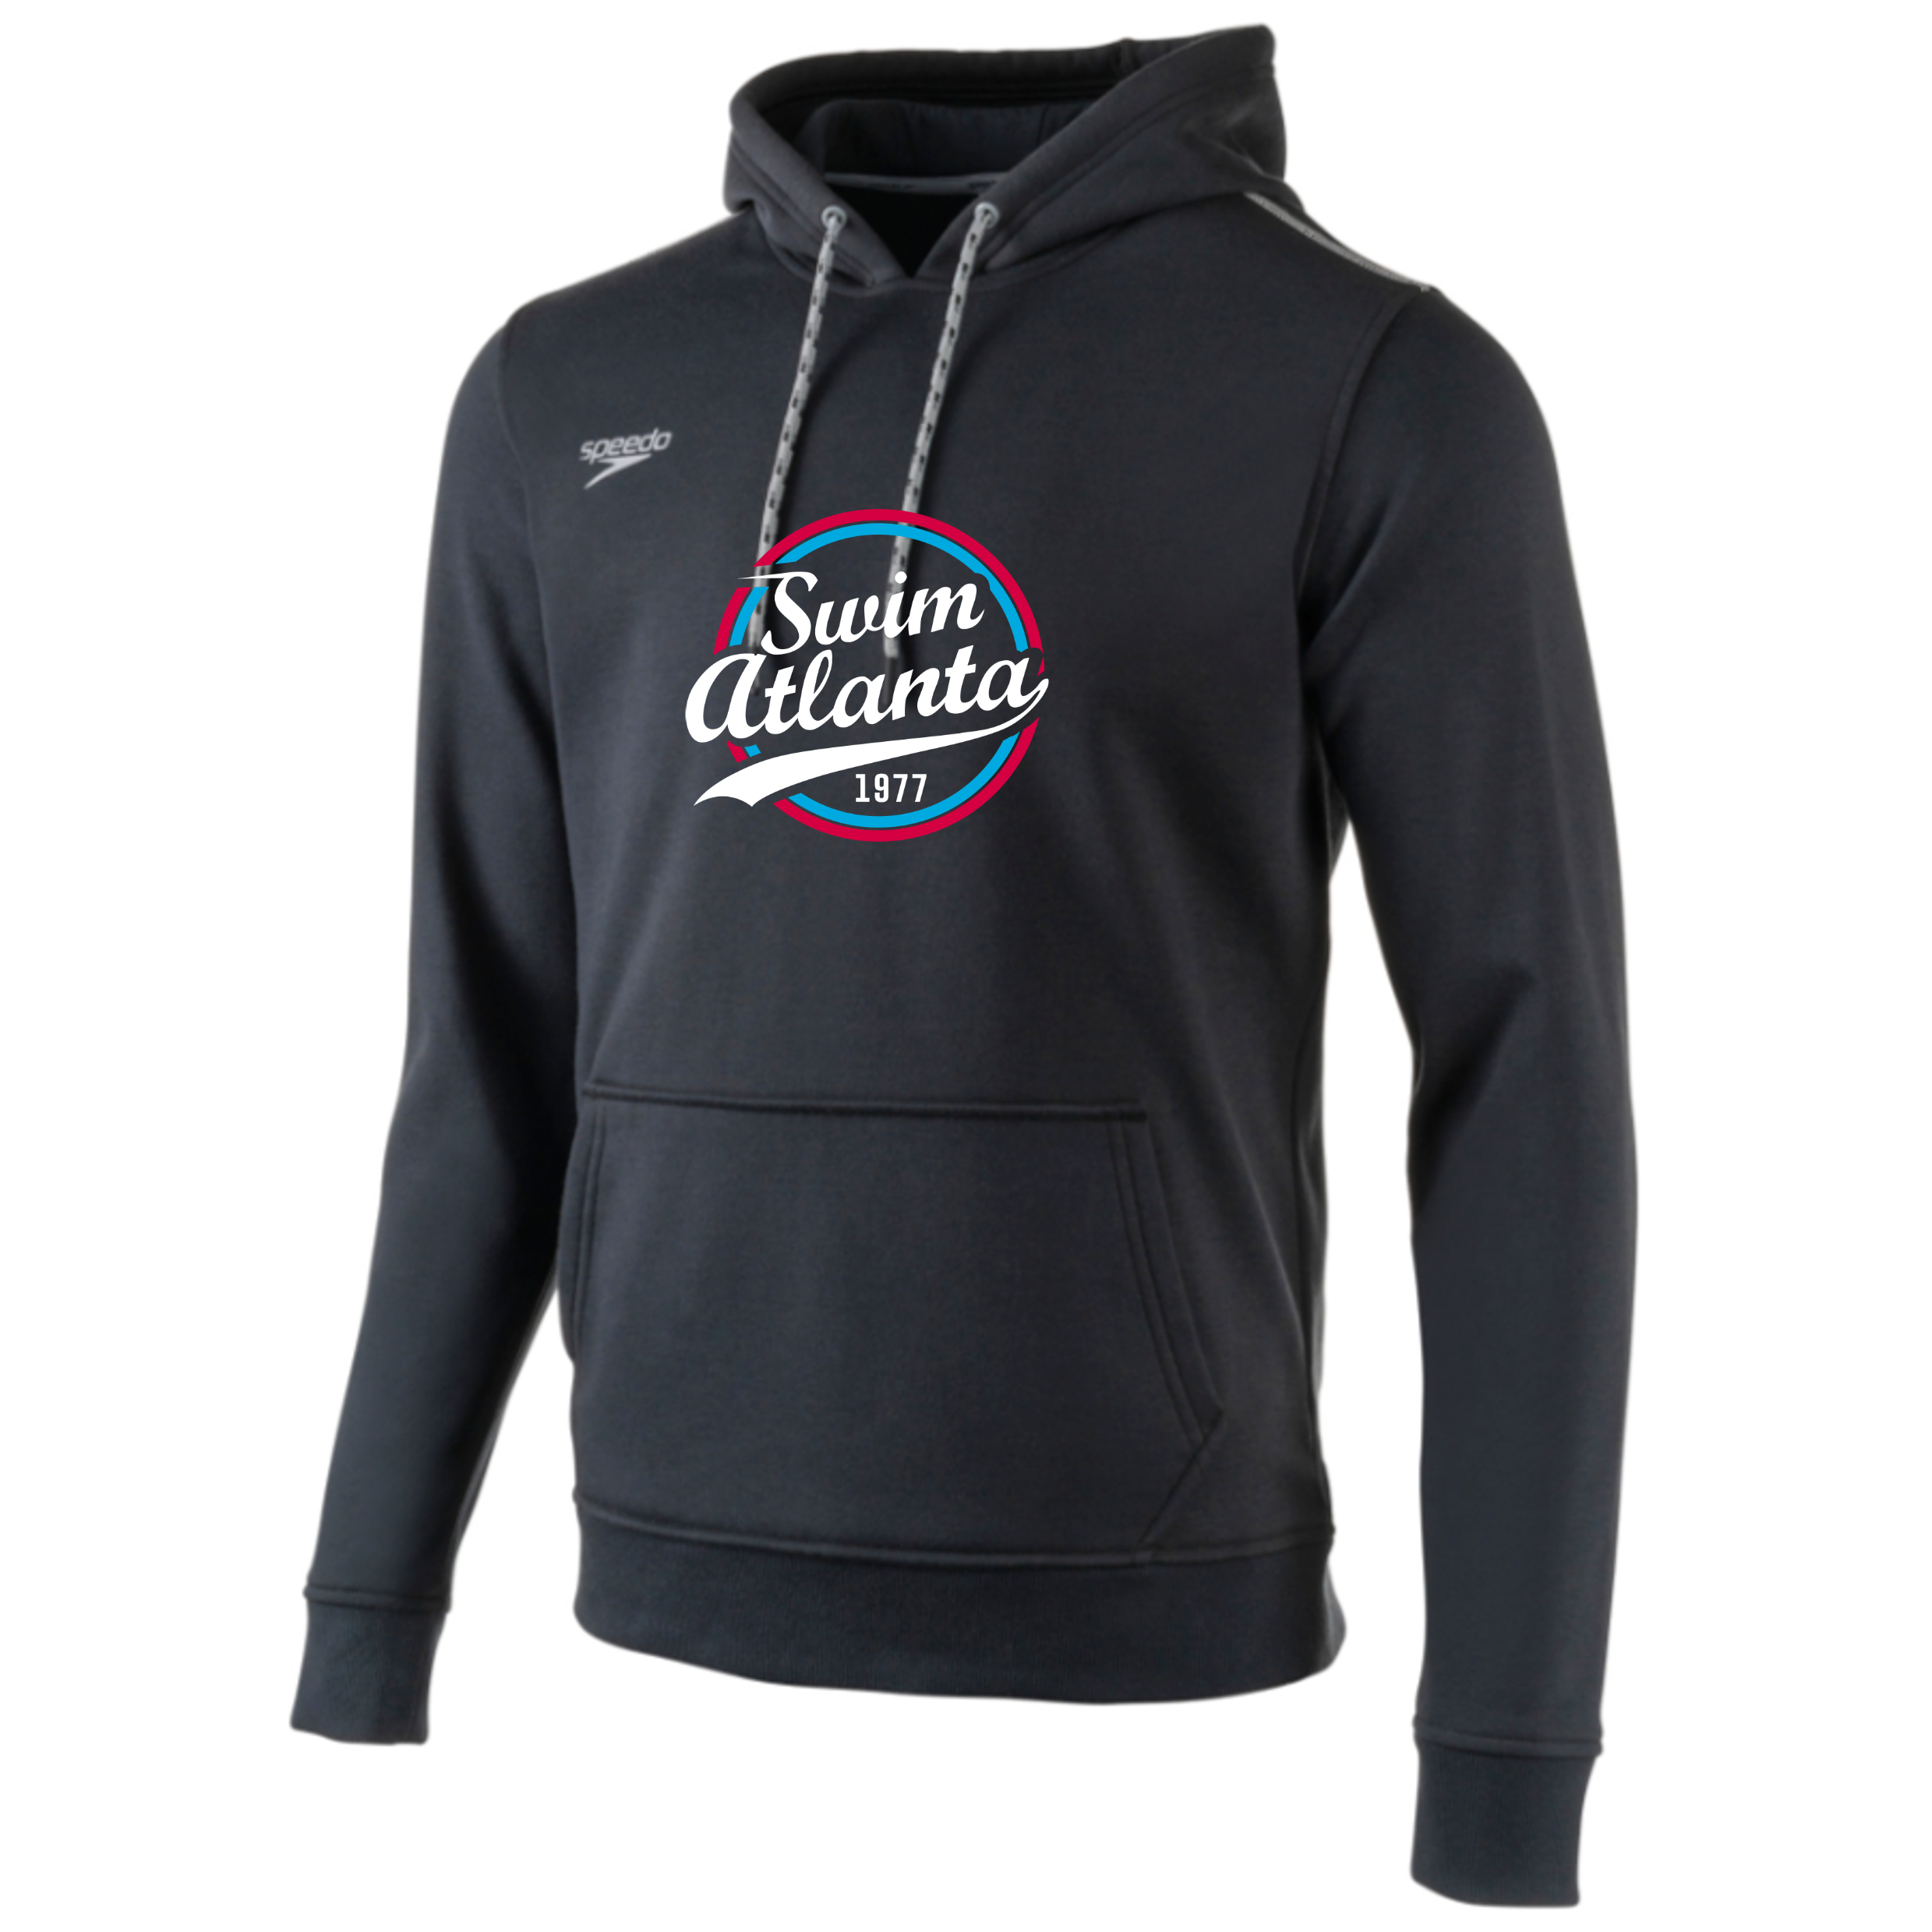 Speedo Unisex Hooded Sweatshirt #6 - Swim Atlanta